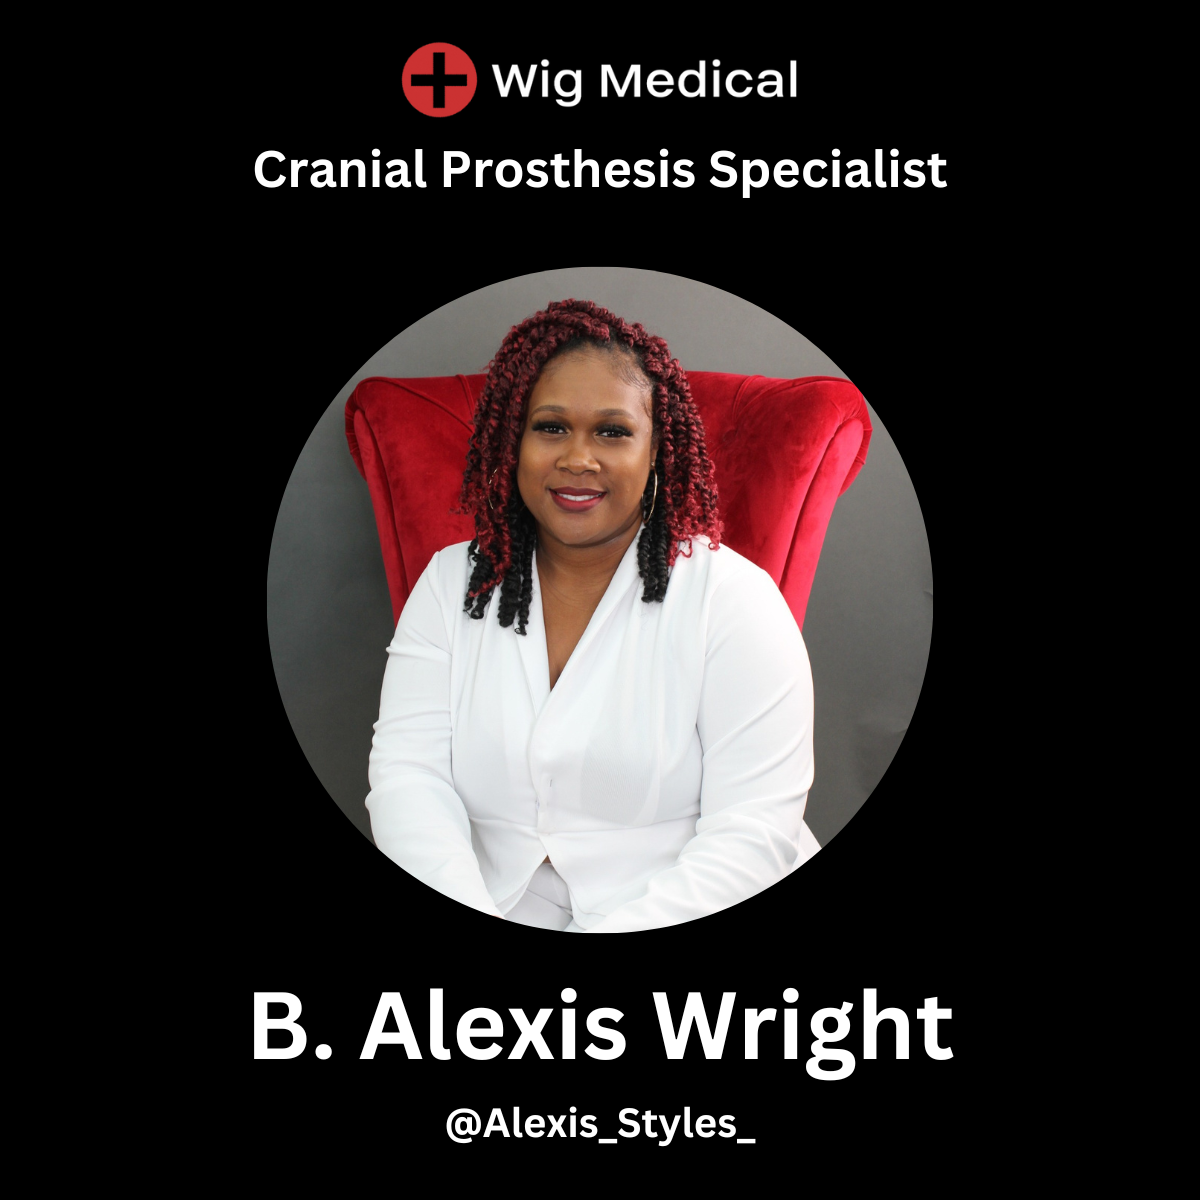 Cranial Prosthesis Specialist B. Alexis Wright